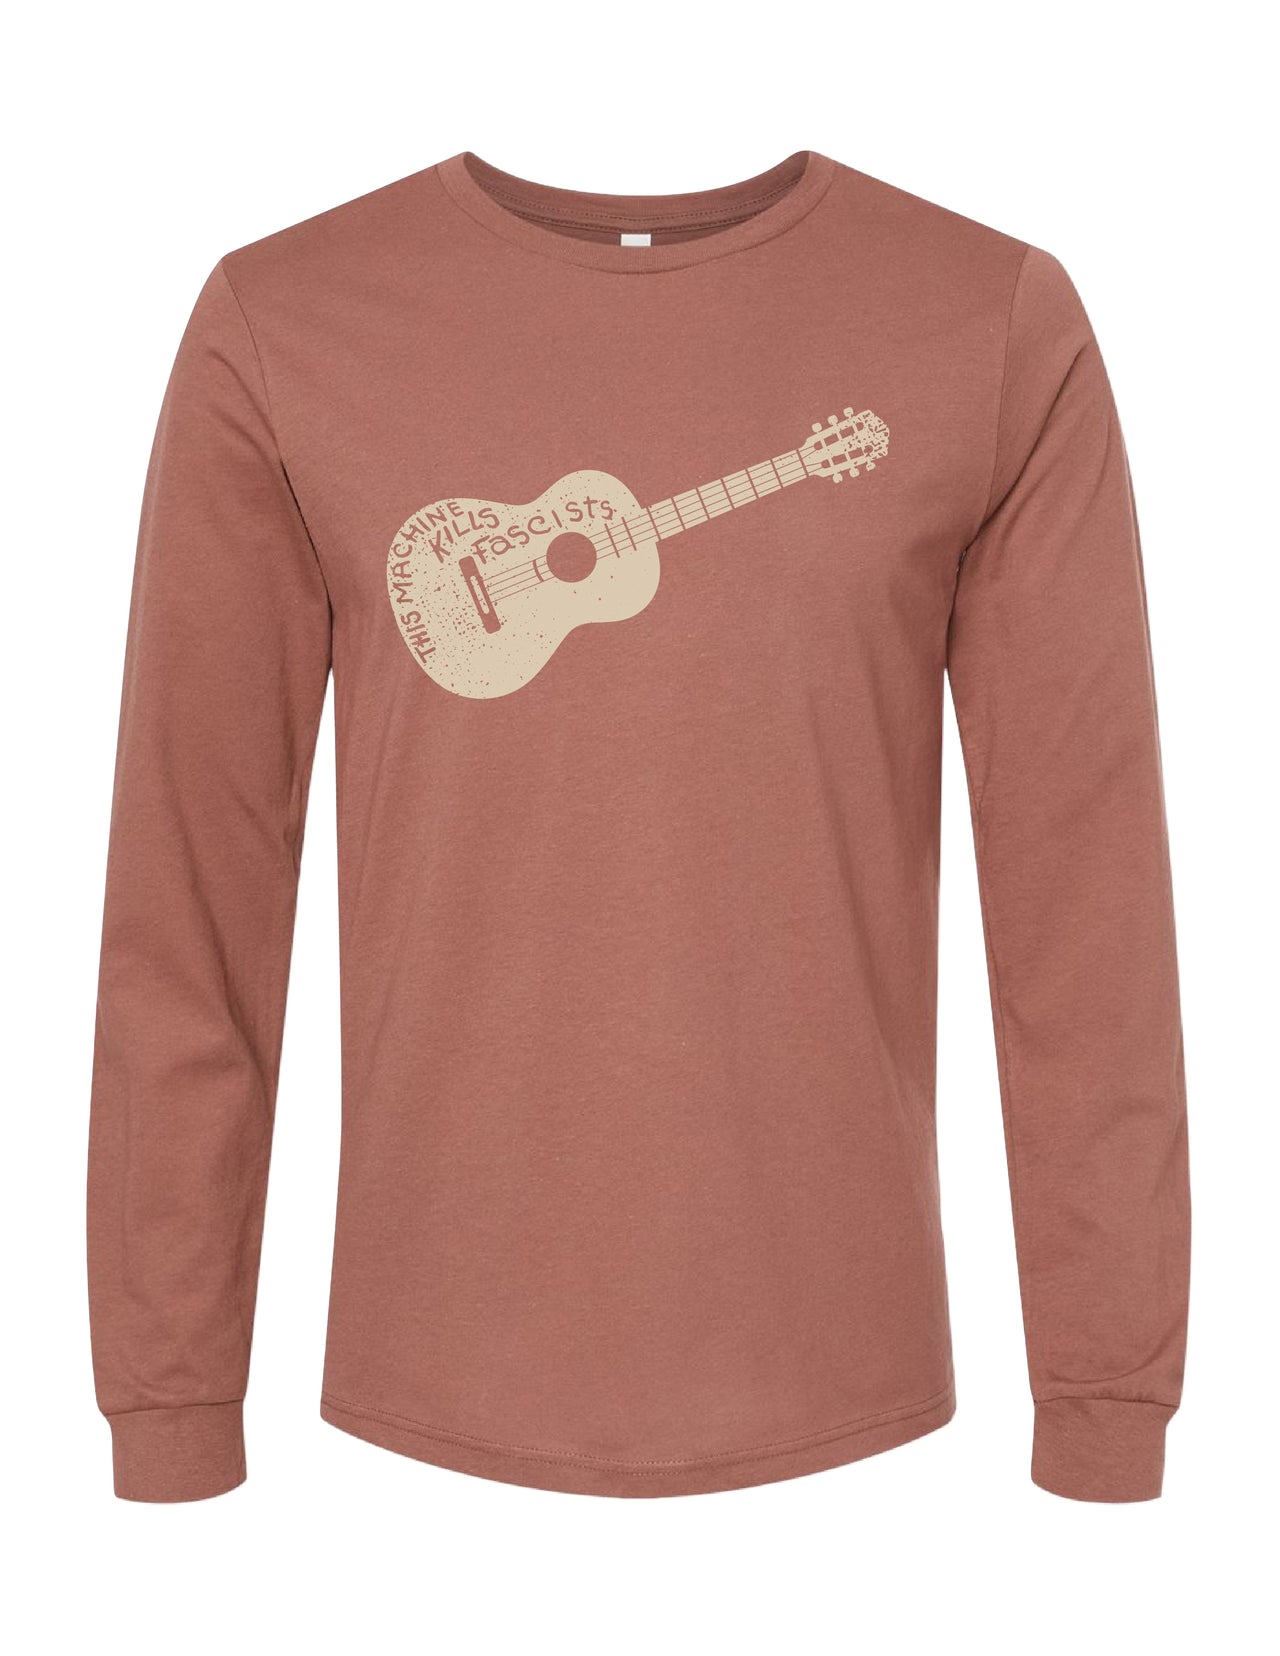 Woody Guitar Long Sleeve Shirt